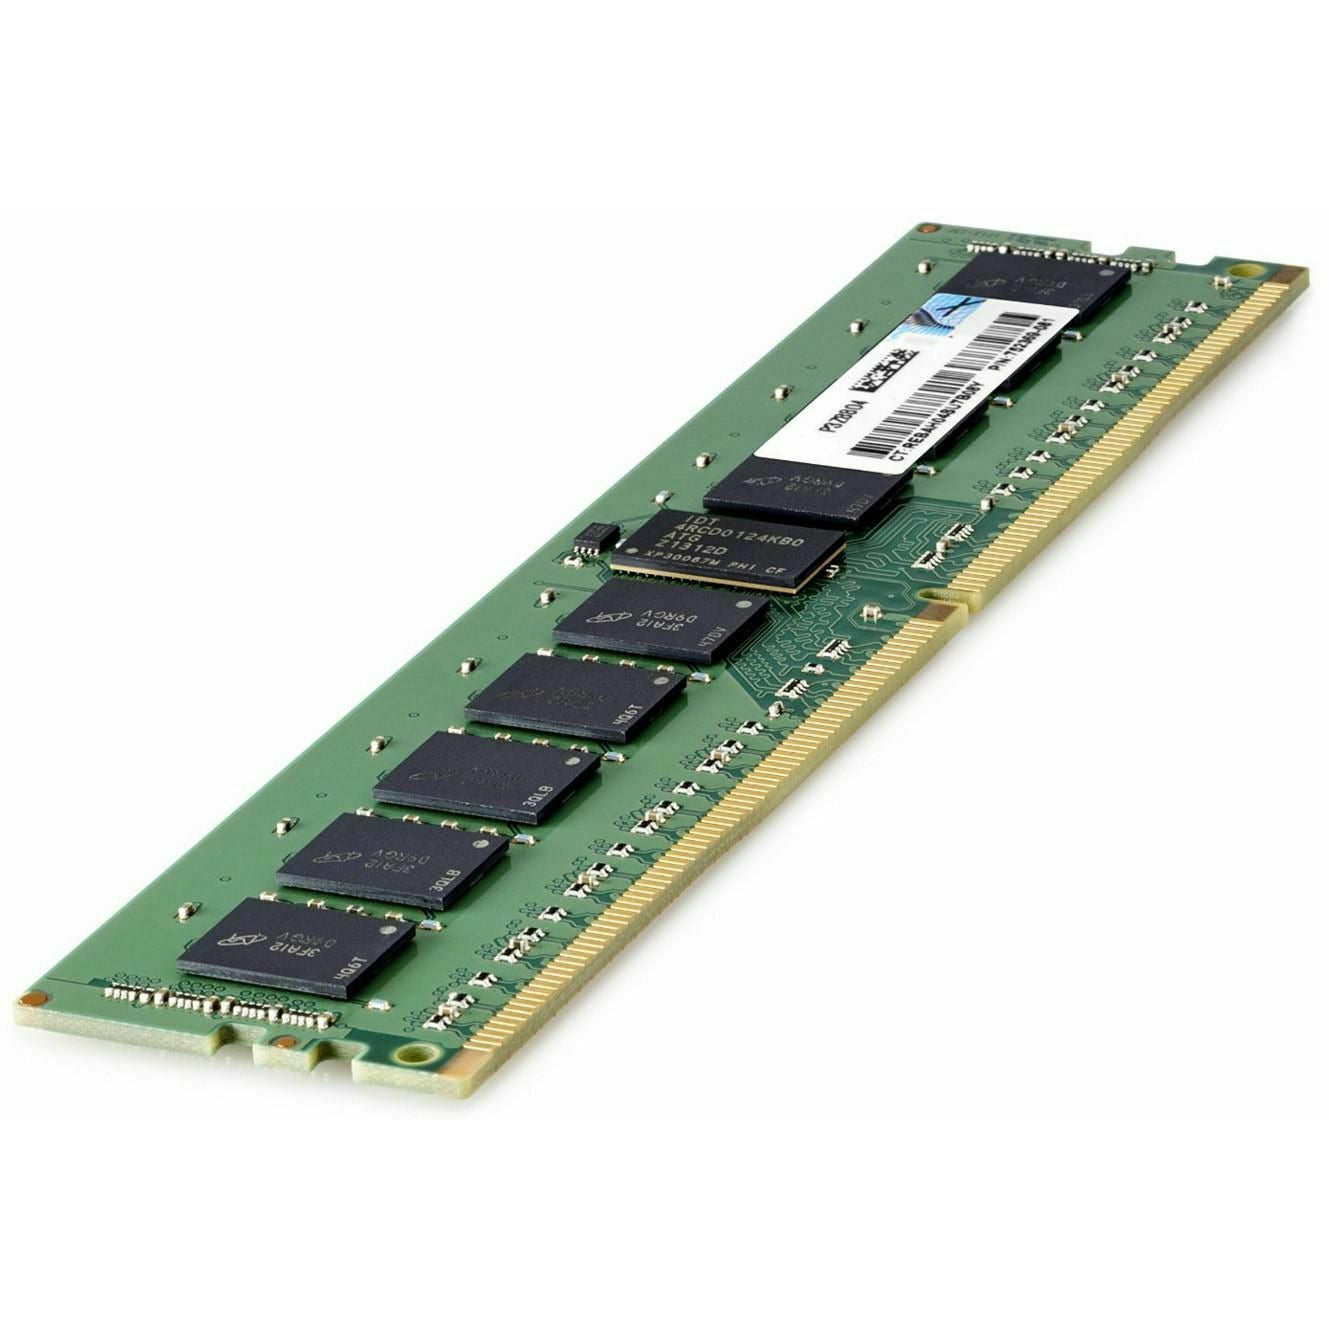 Lenovo 16GB TruDDR4 PC4-17000 CL15 2133MHz DDR4 SDRAM Registered